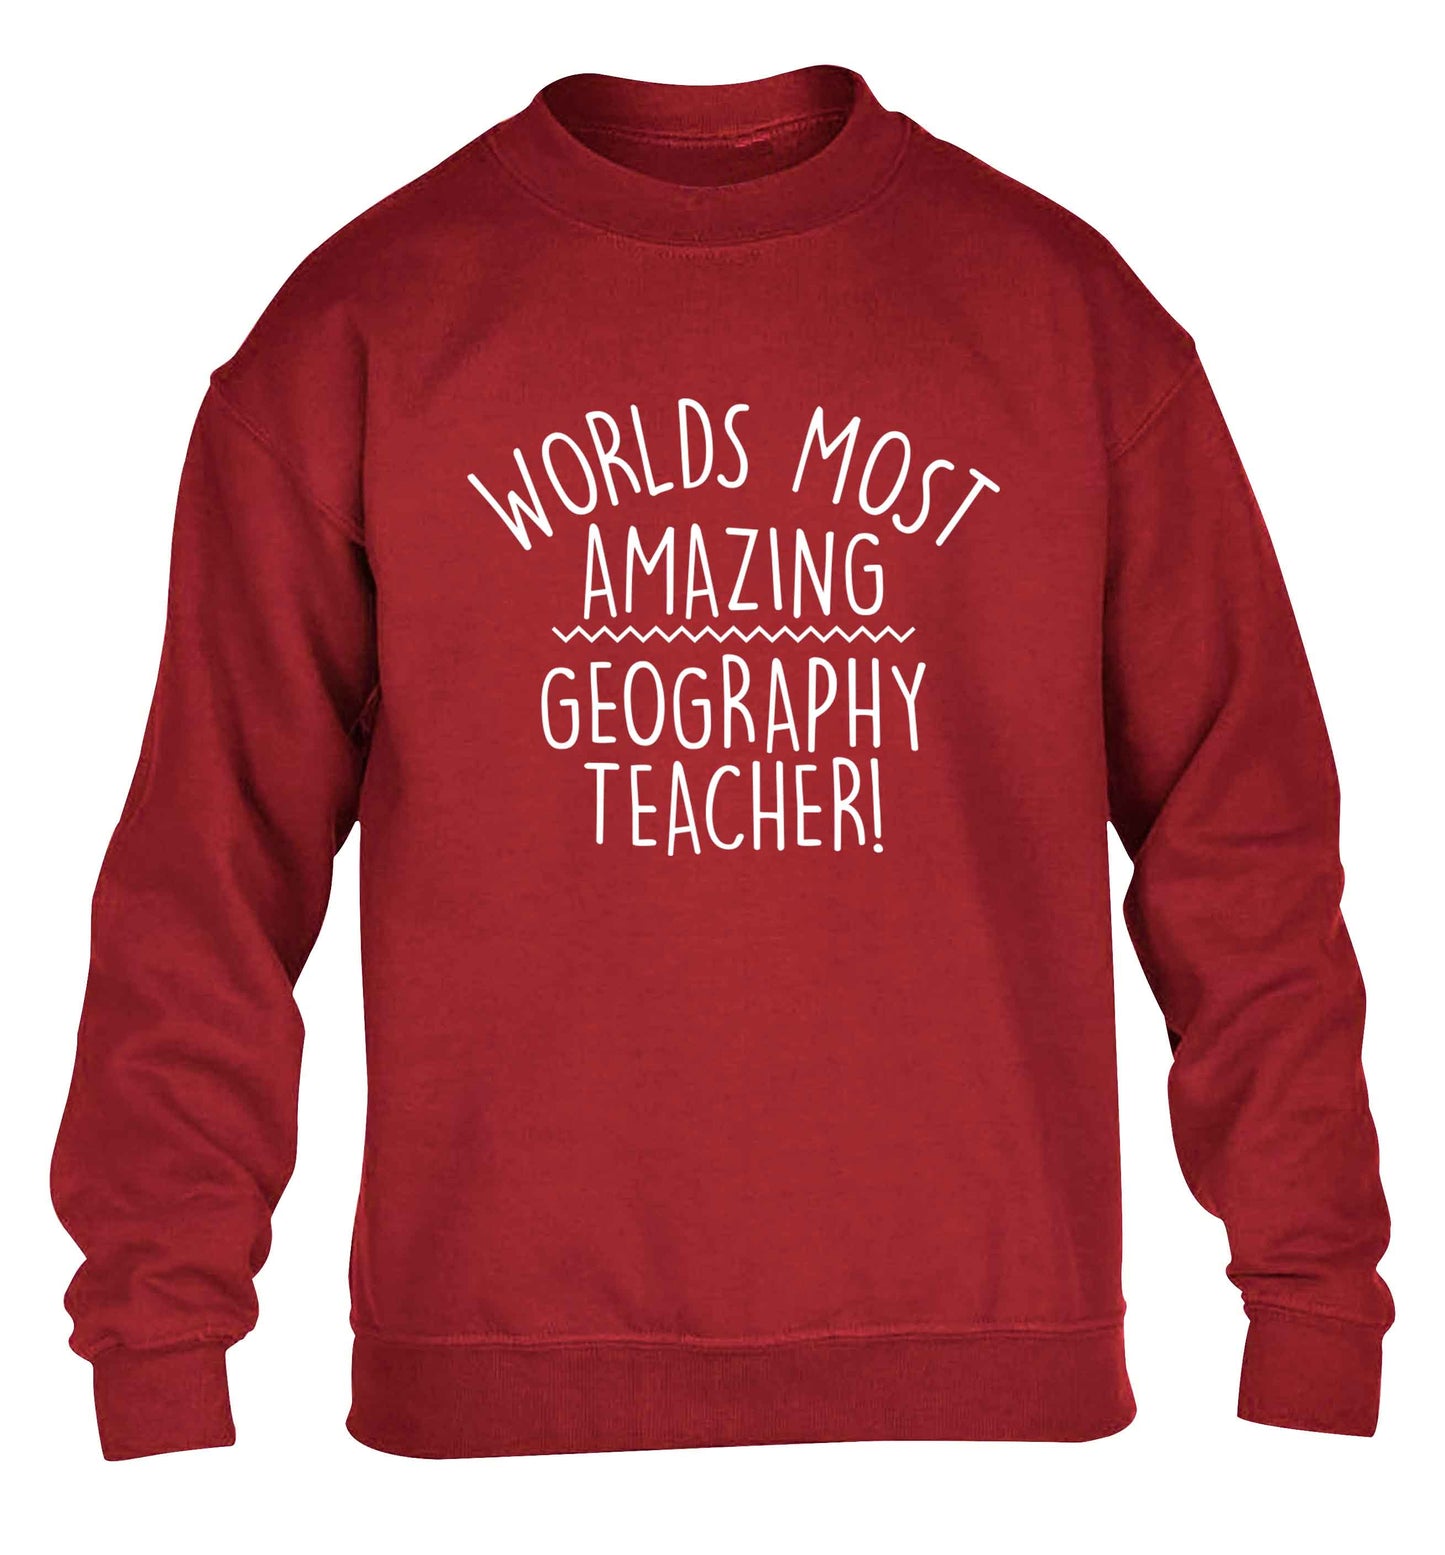 Worlds most amazing geography teacher children's grey sweater 12-13 Years